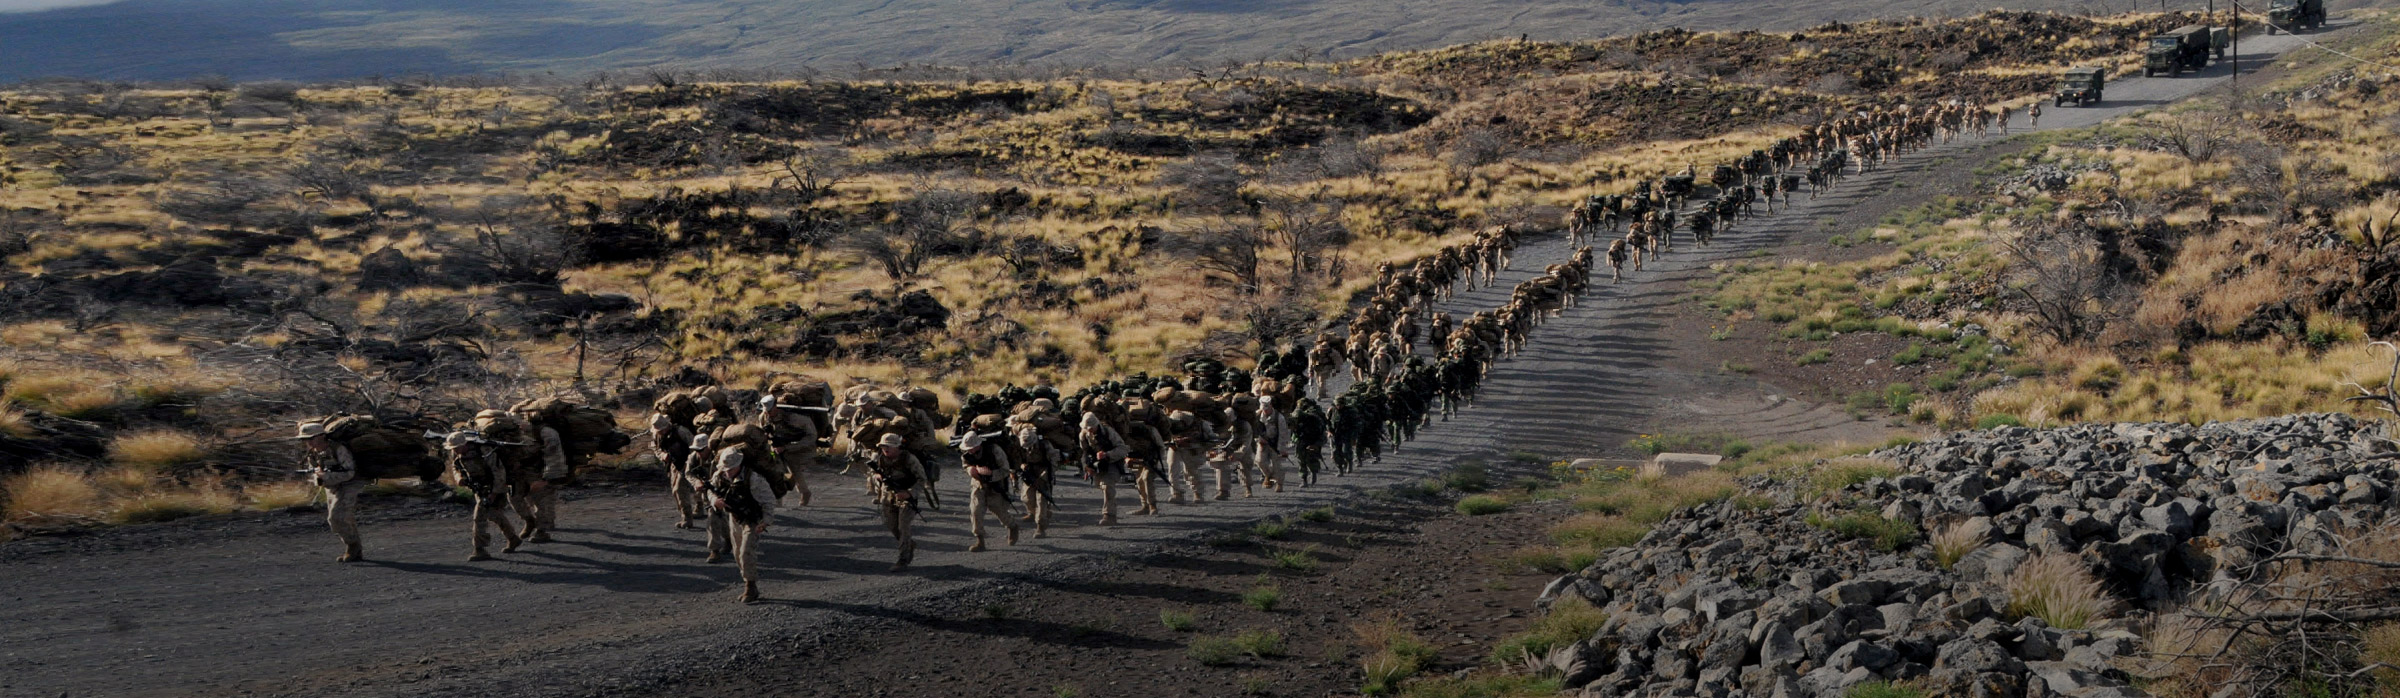 AM 10:00 - 군사대비태세를 점검중인 이순진 합참의장 - 우리 군은 24시간 우리 국토와 국민을 지키기 위해 뛰고 있습니다.